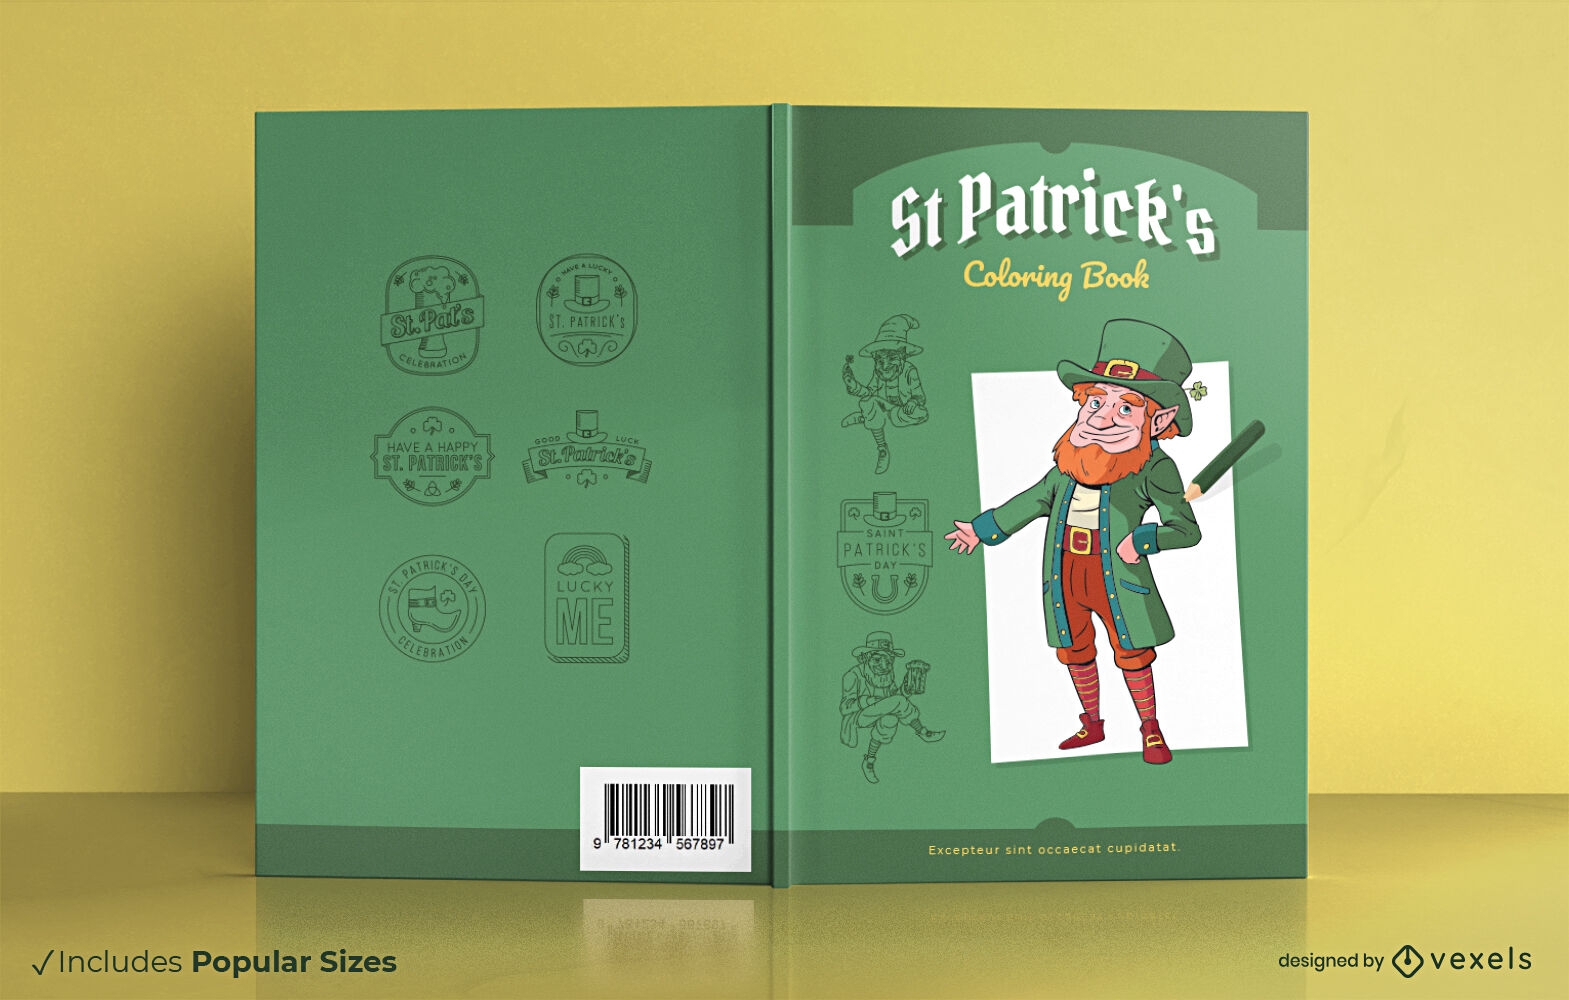 St. Patrick's coloring book cover design